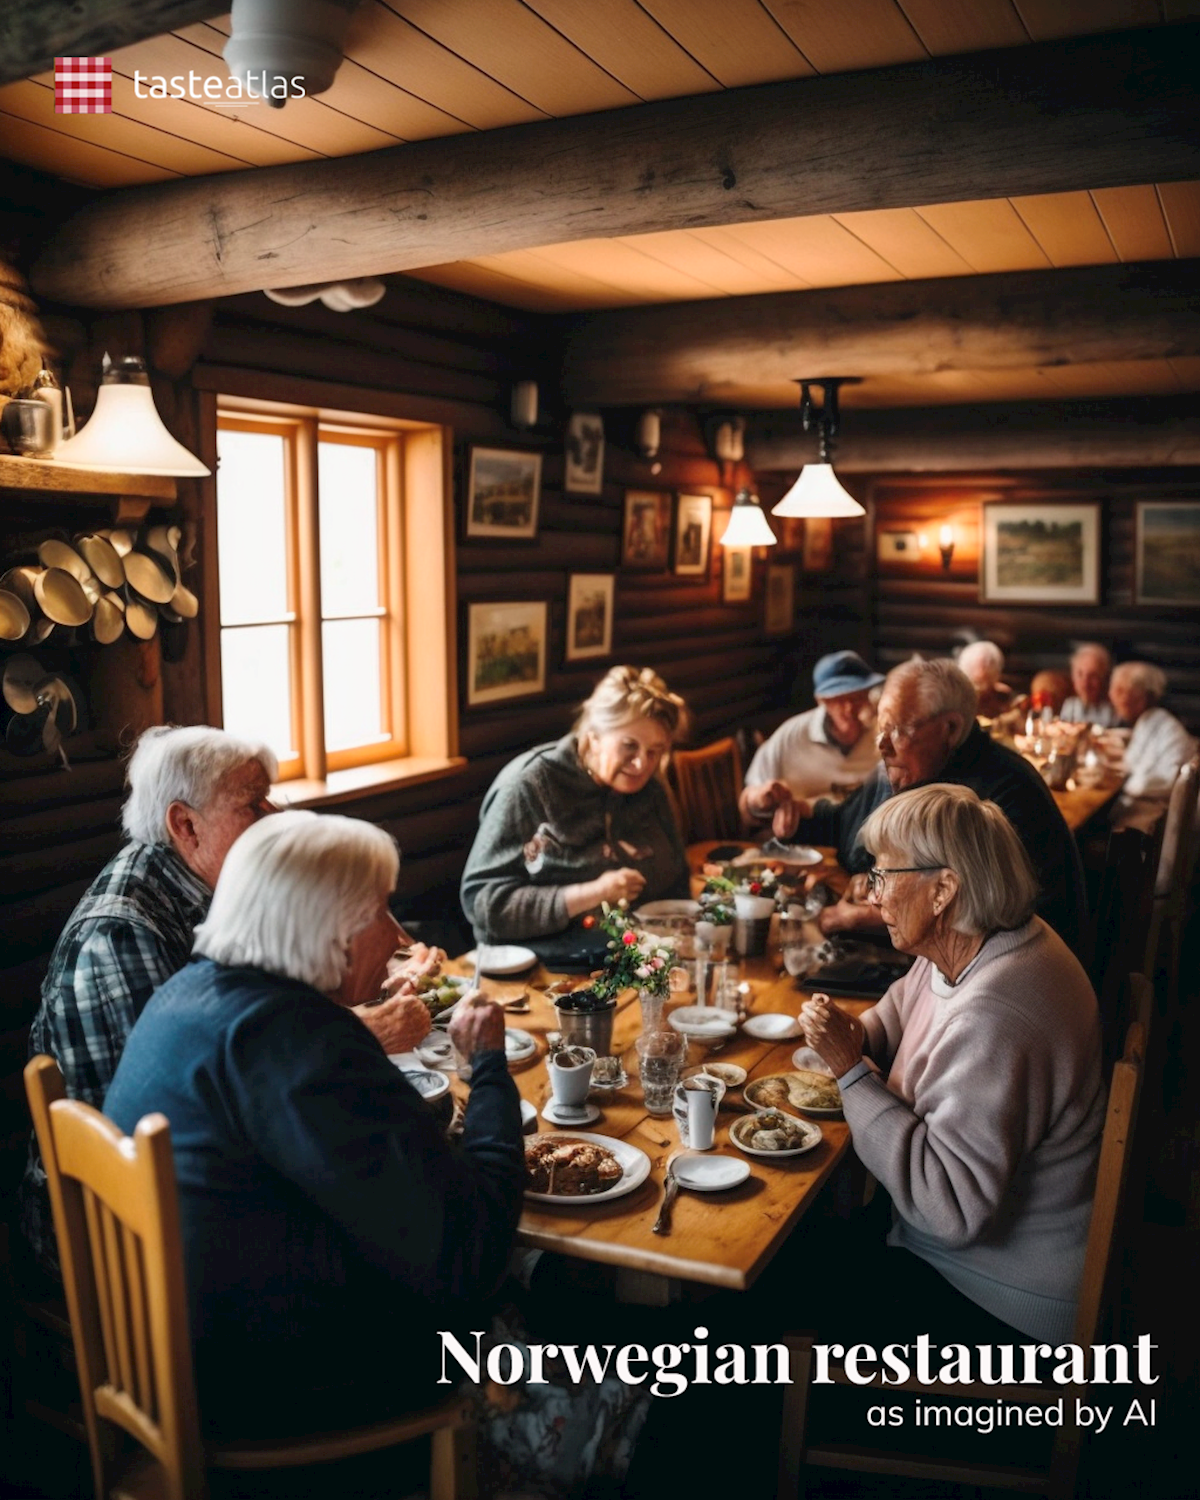 Prompt: Imagine locals eating in a traditional Norwegian restaurant